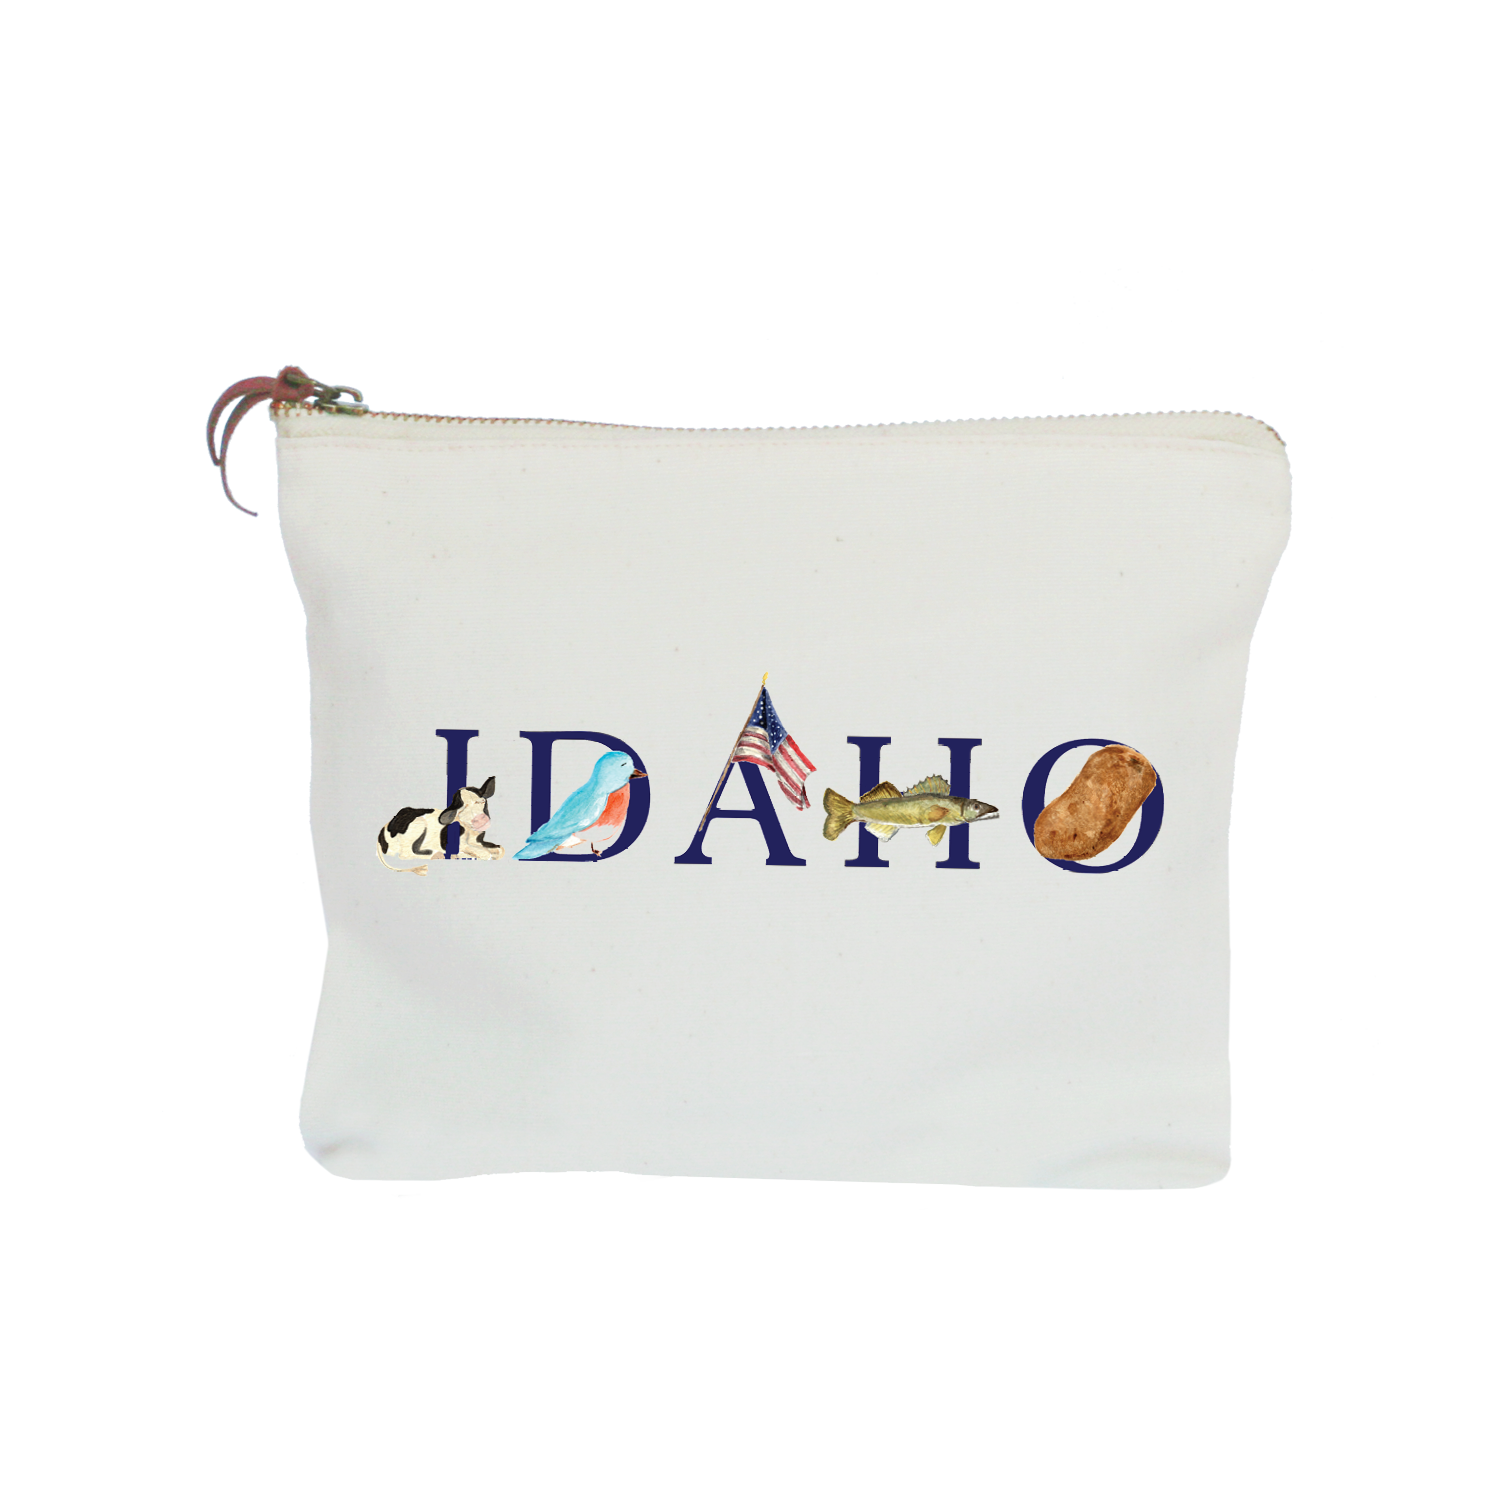 Idaho zipper pouch